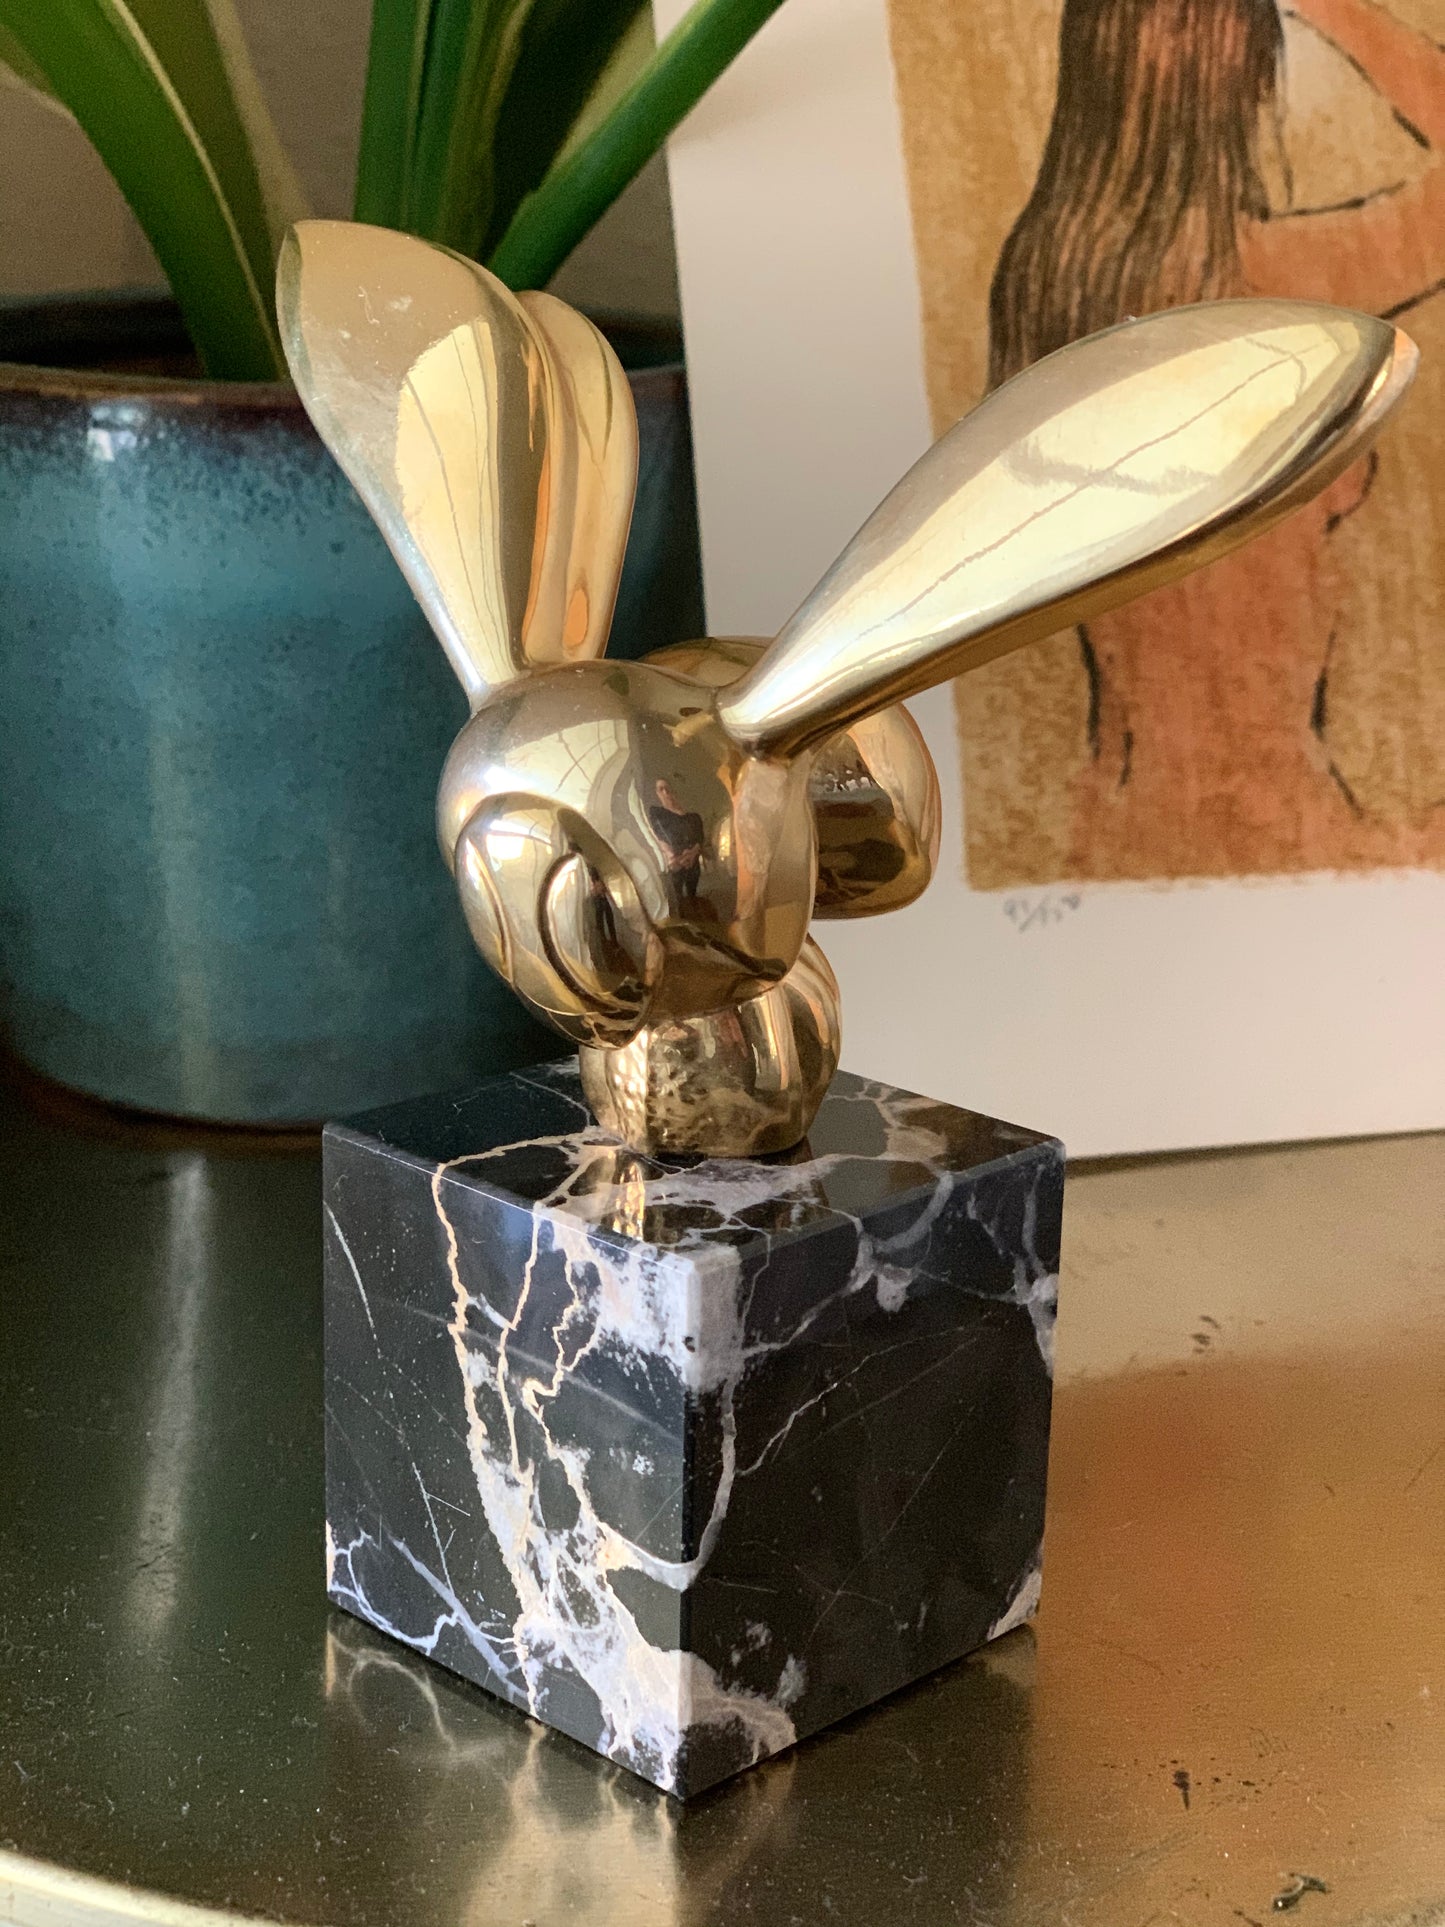 Vintage Lachaise bee statuette